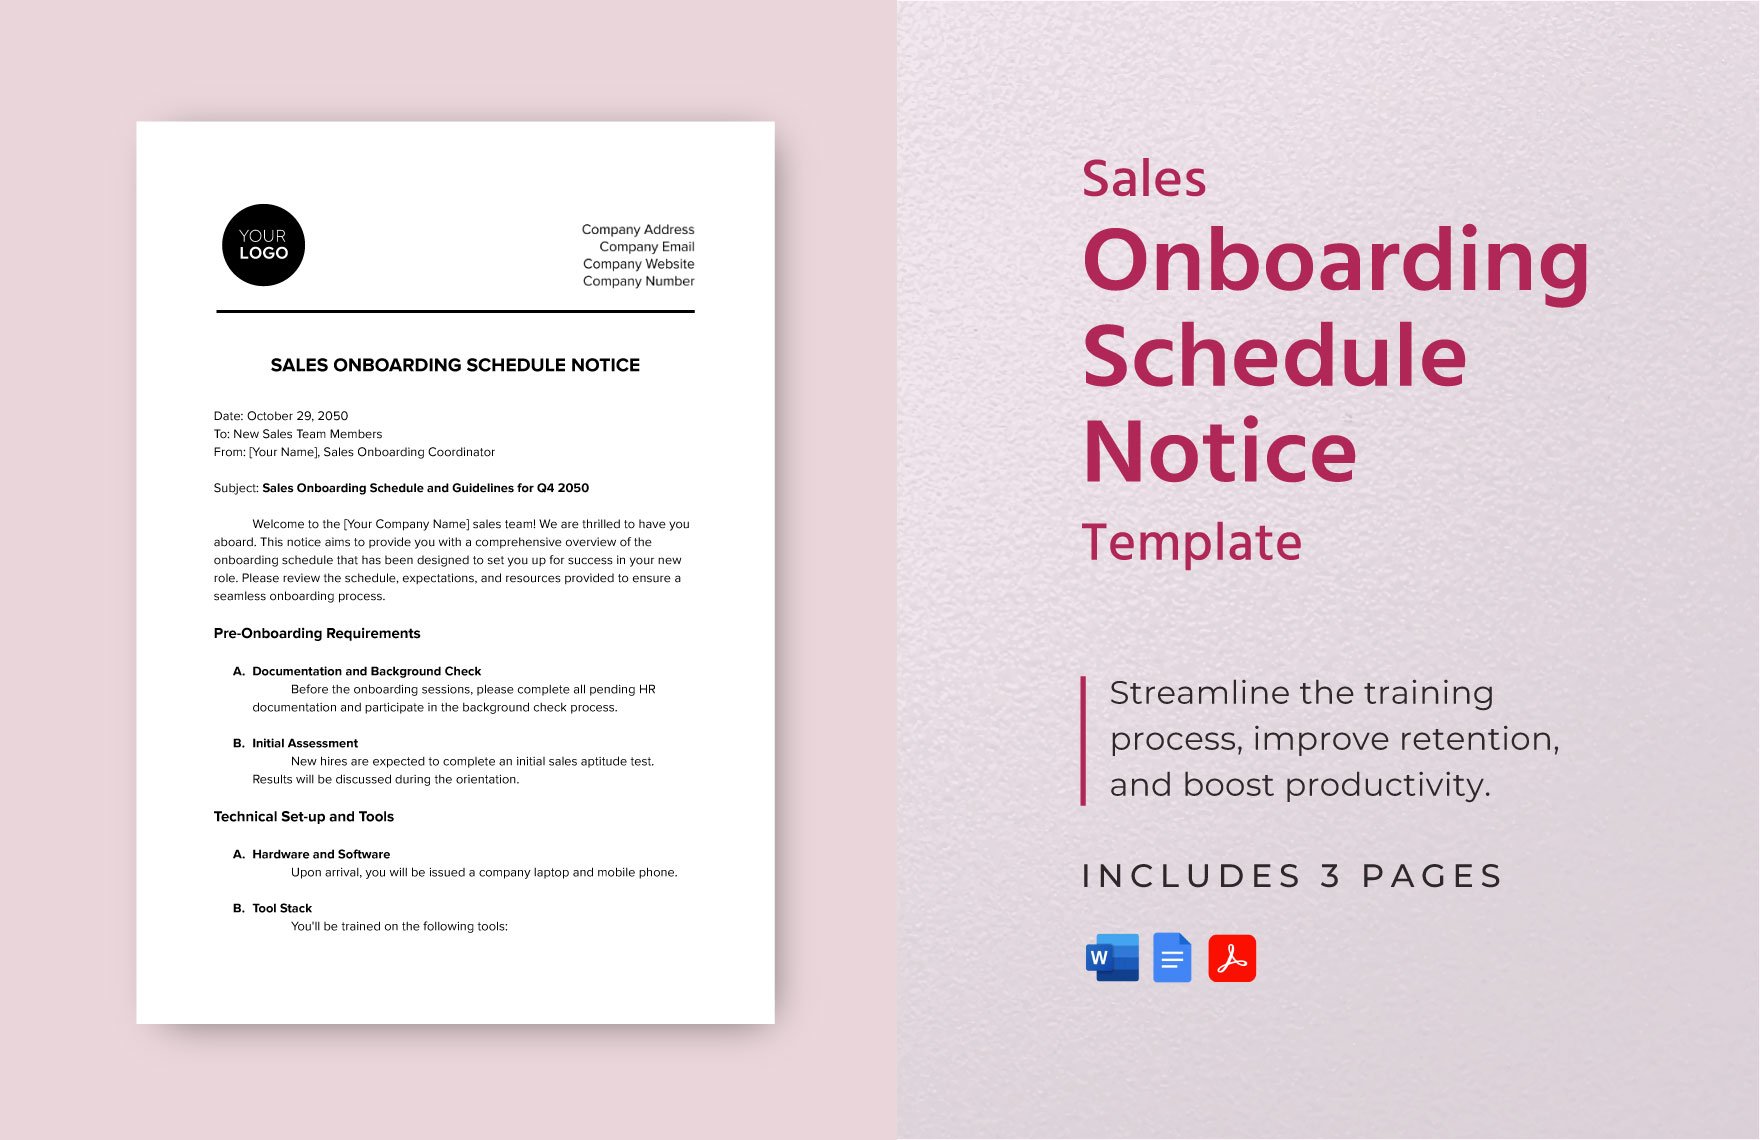 Sales Onboarding Schedule Notice Template in Word, Google Docs, PDF